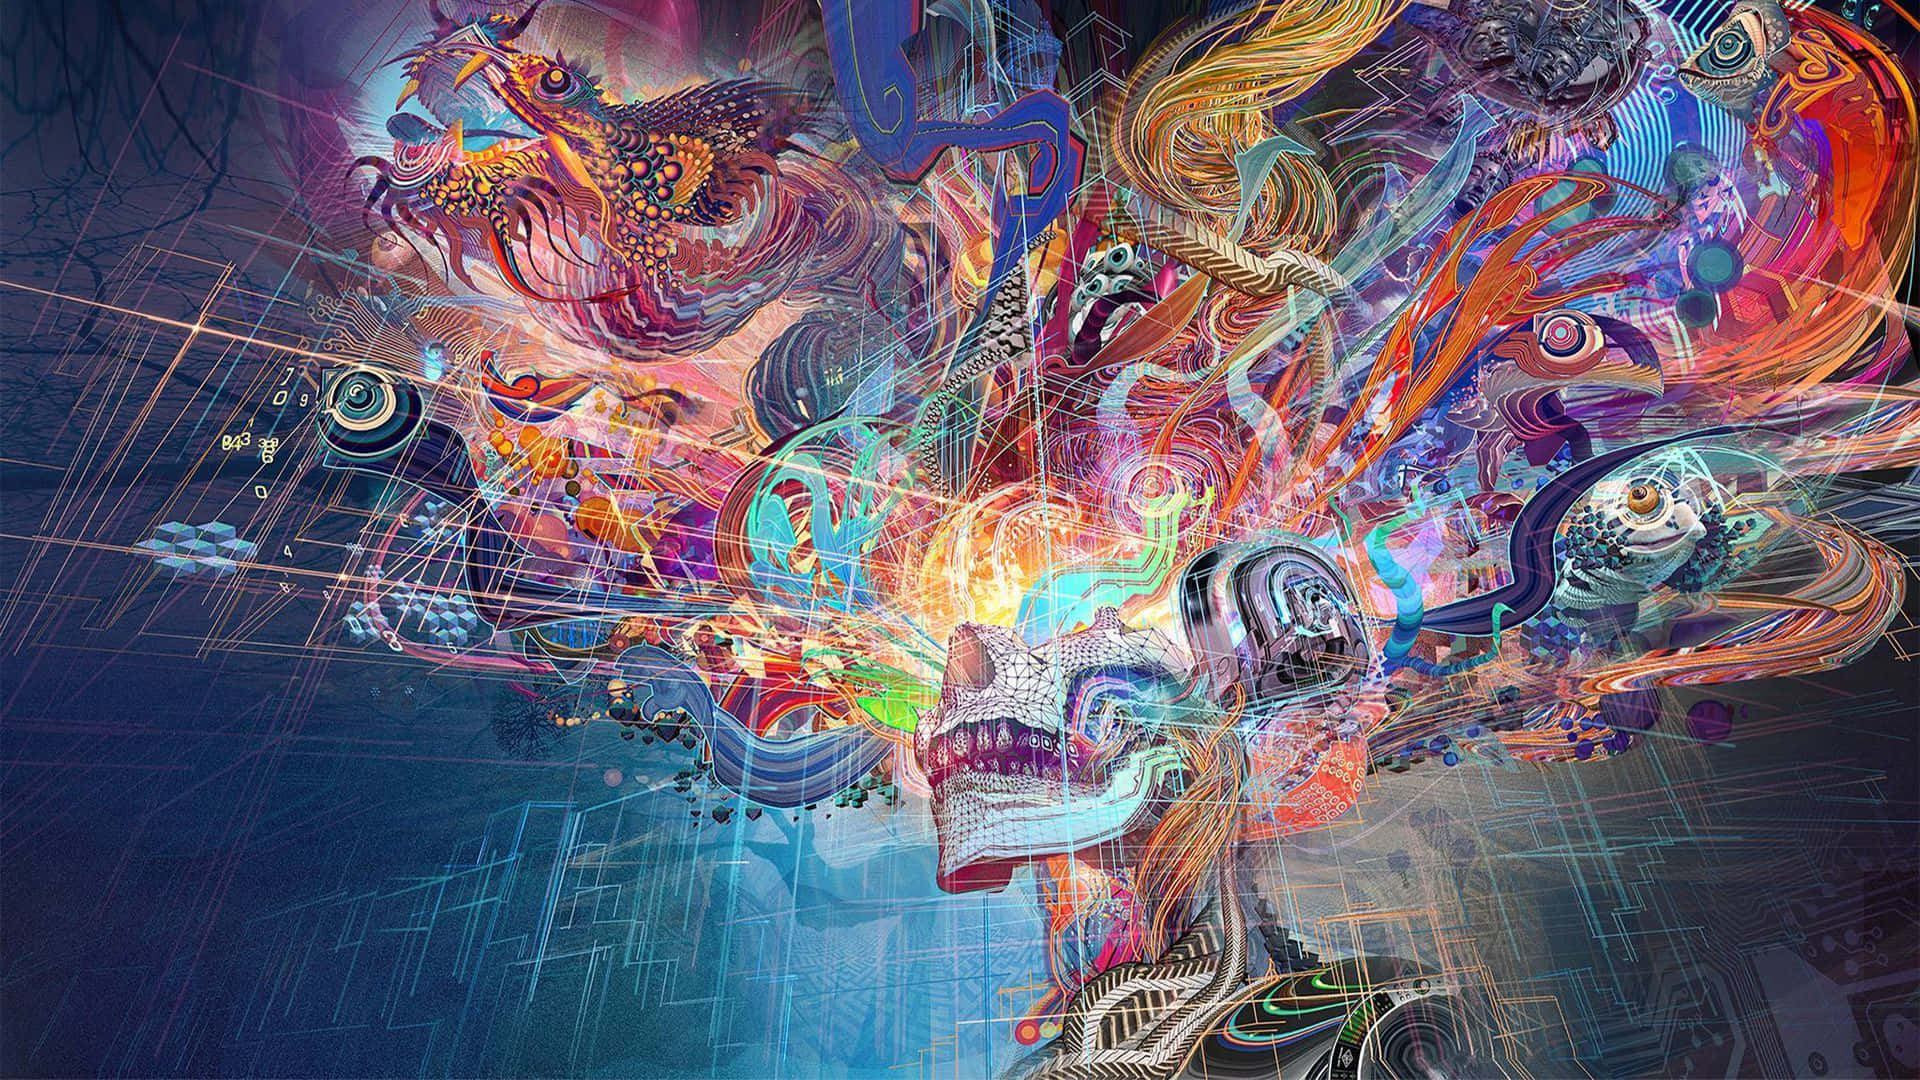 Dive into a world of artistic imagination! Wallpaper